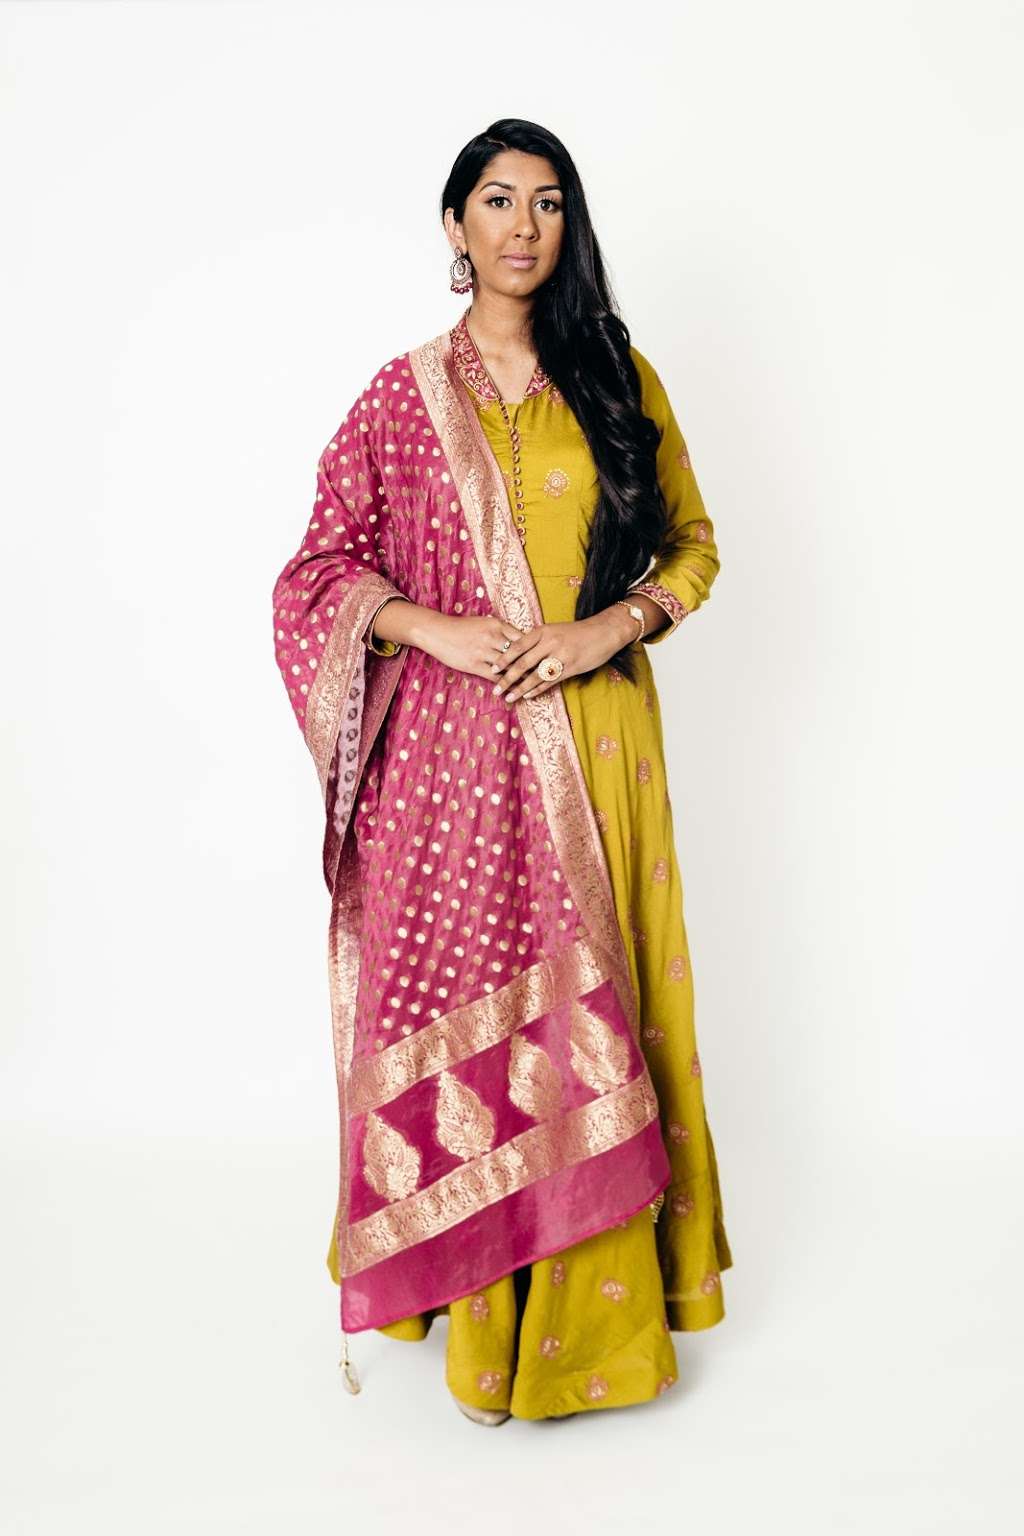 Naiya Indian Fashion | 6269 Arcadia St, Eastvale, CA 92880 | Phone: (818) 300-6671